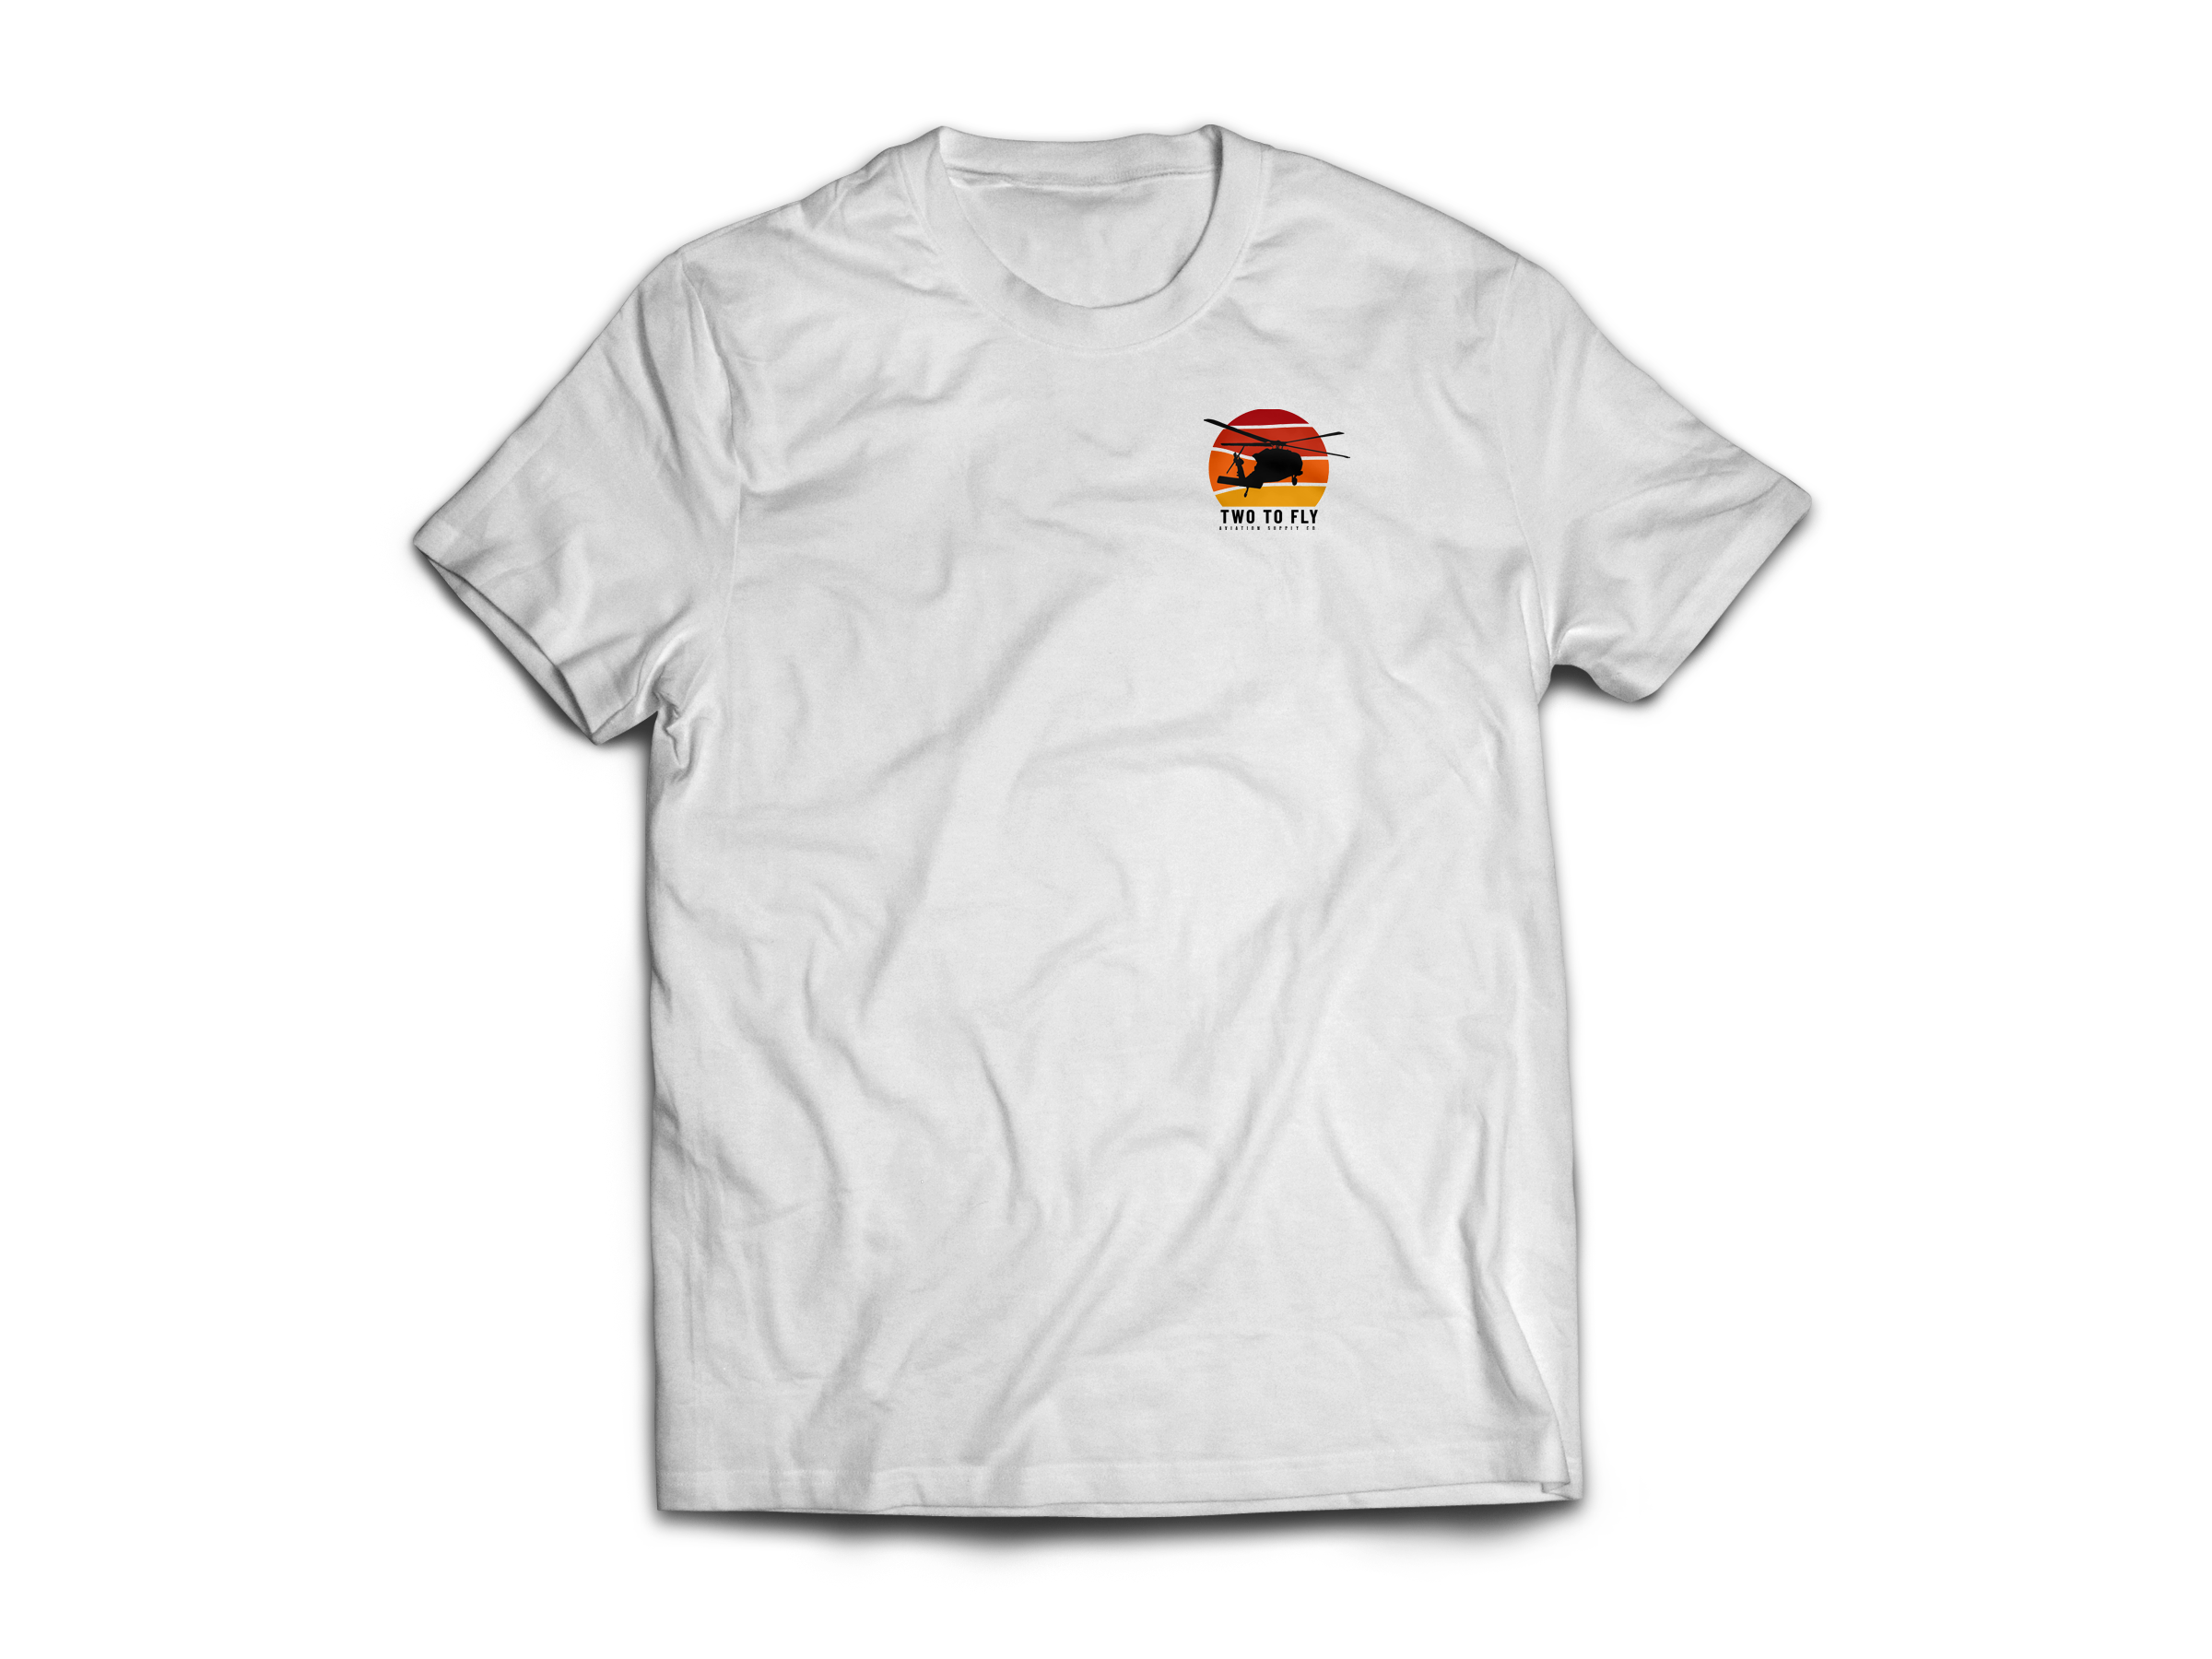 Sikorsky Fire Service T-shirt